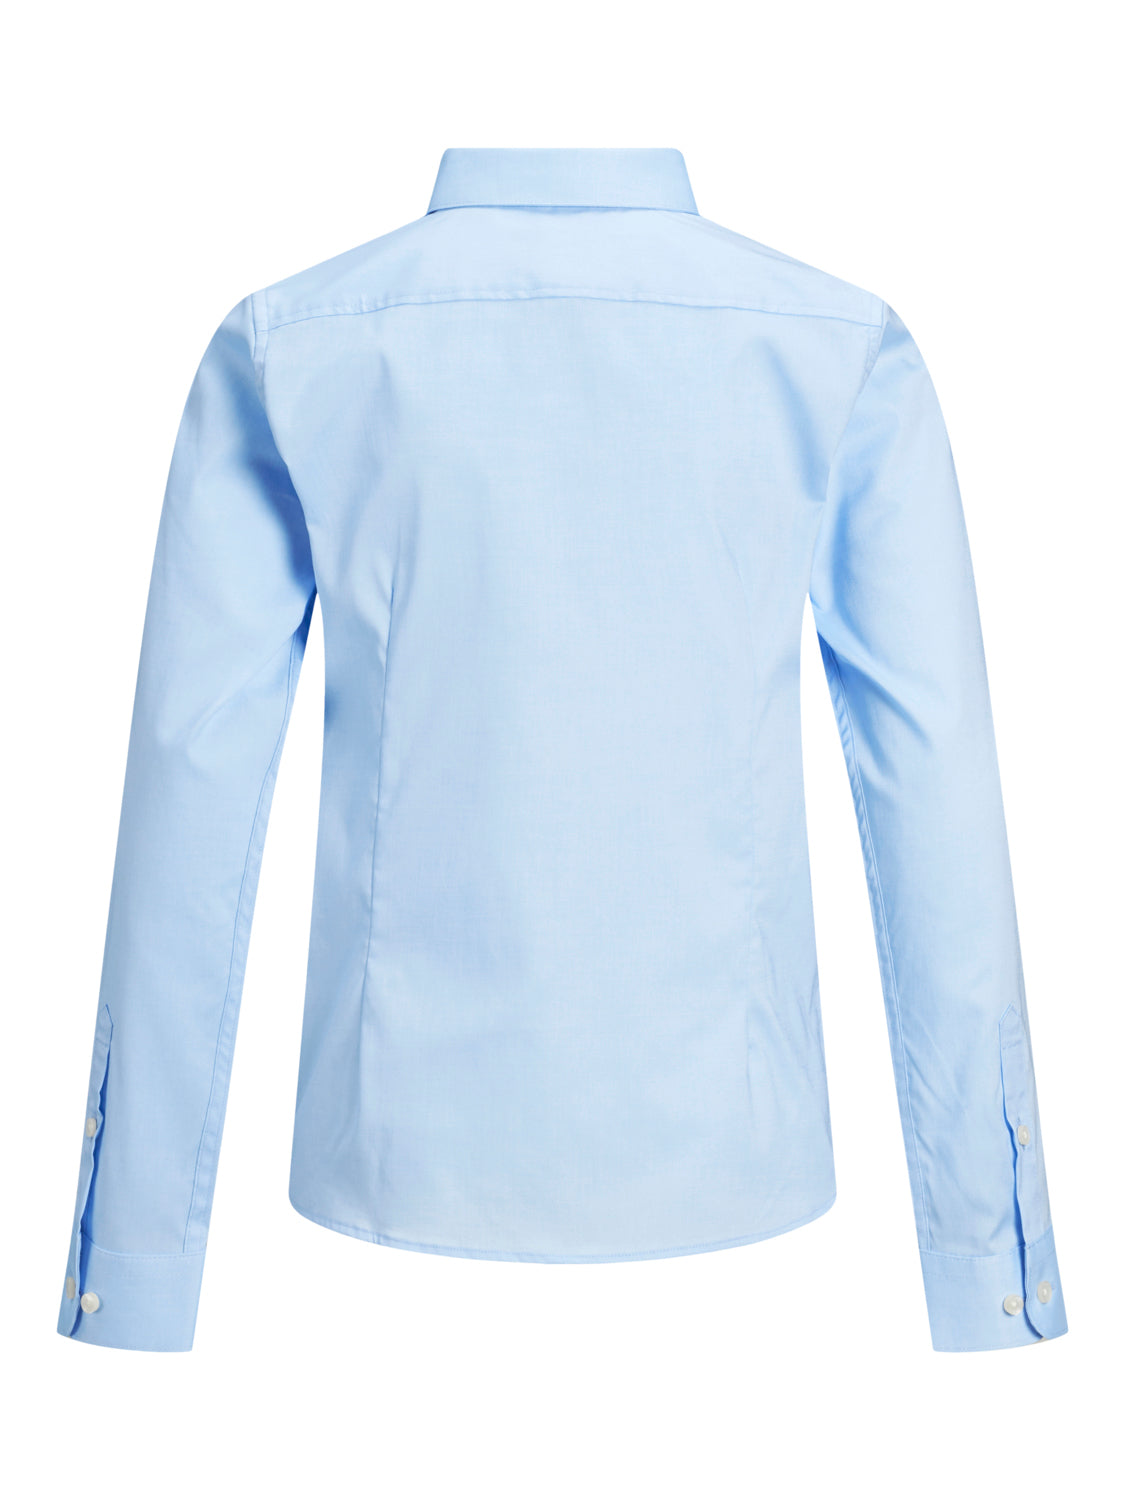 JPRPARMA Shirts - Cashmere Blue